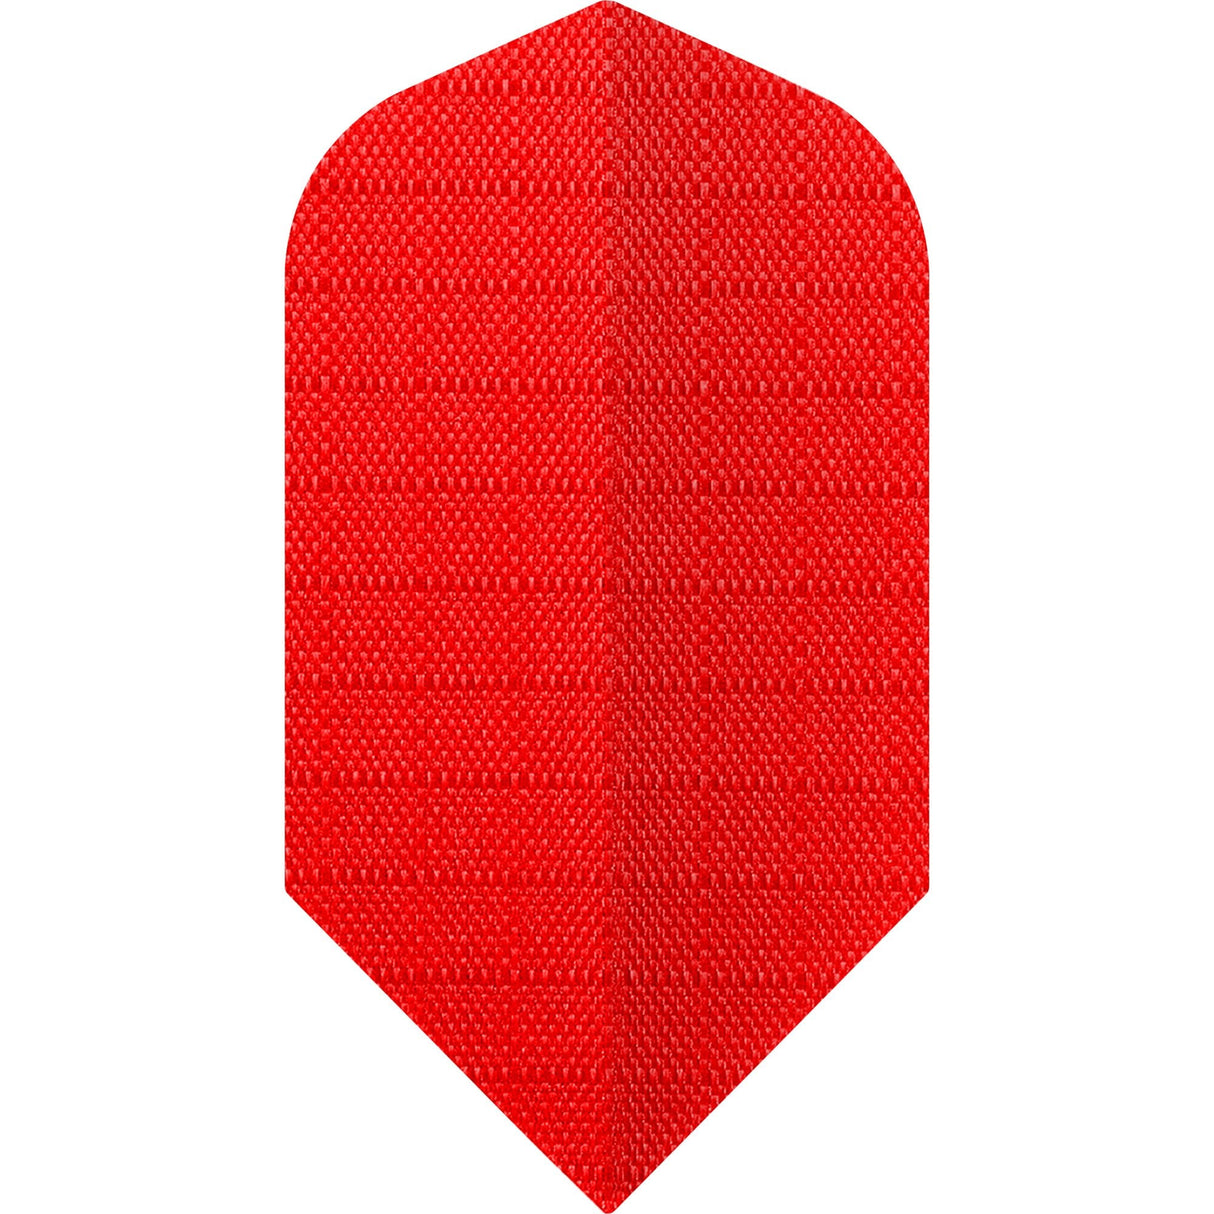 Designa Dart Flights - Fabric Rip Stop Nylon - Longlife - Slim Red